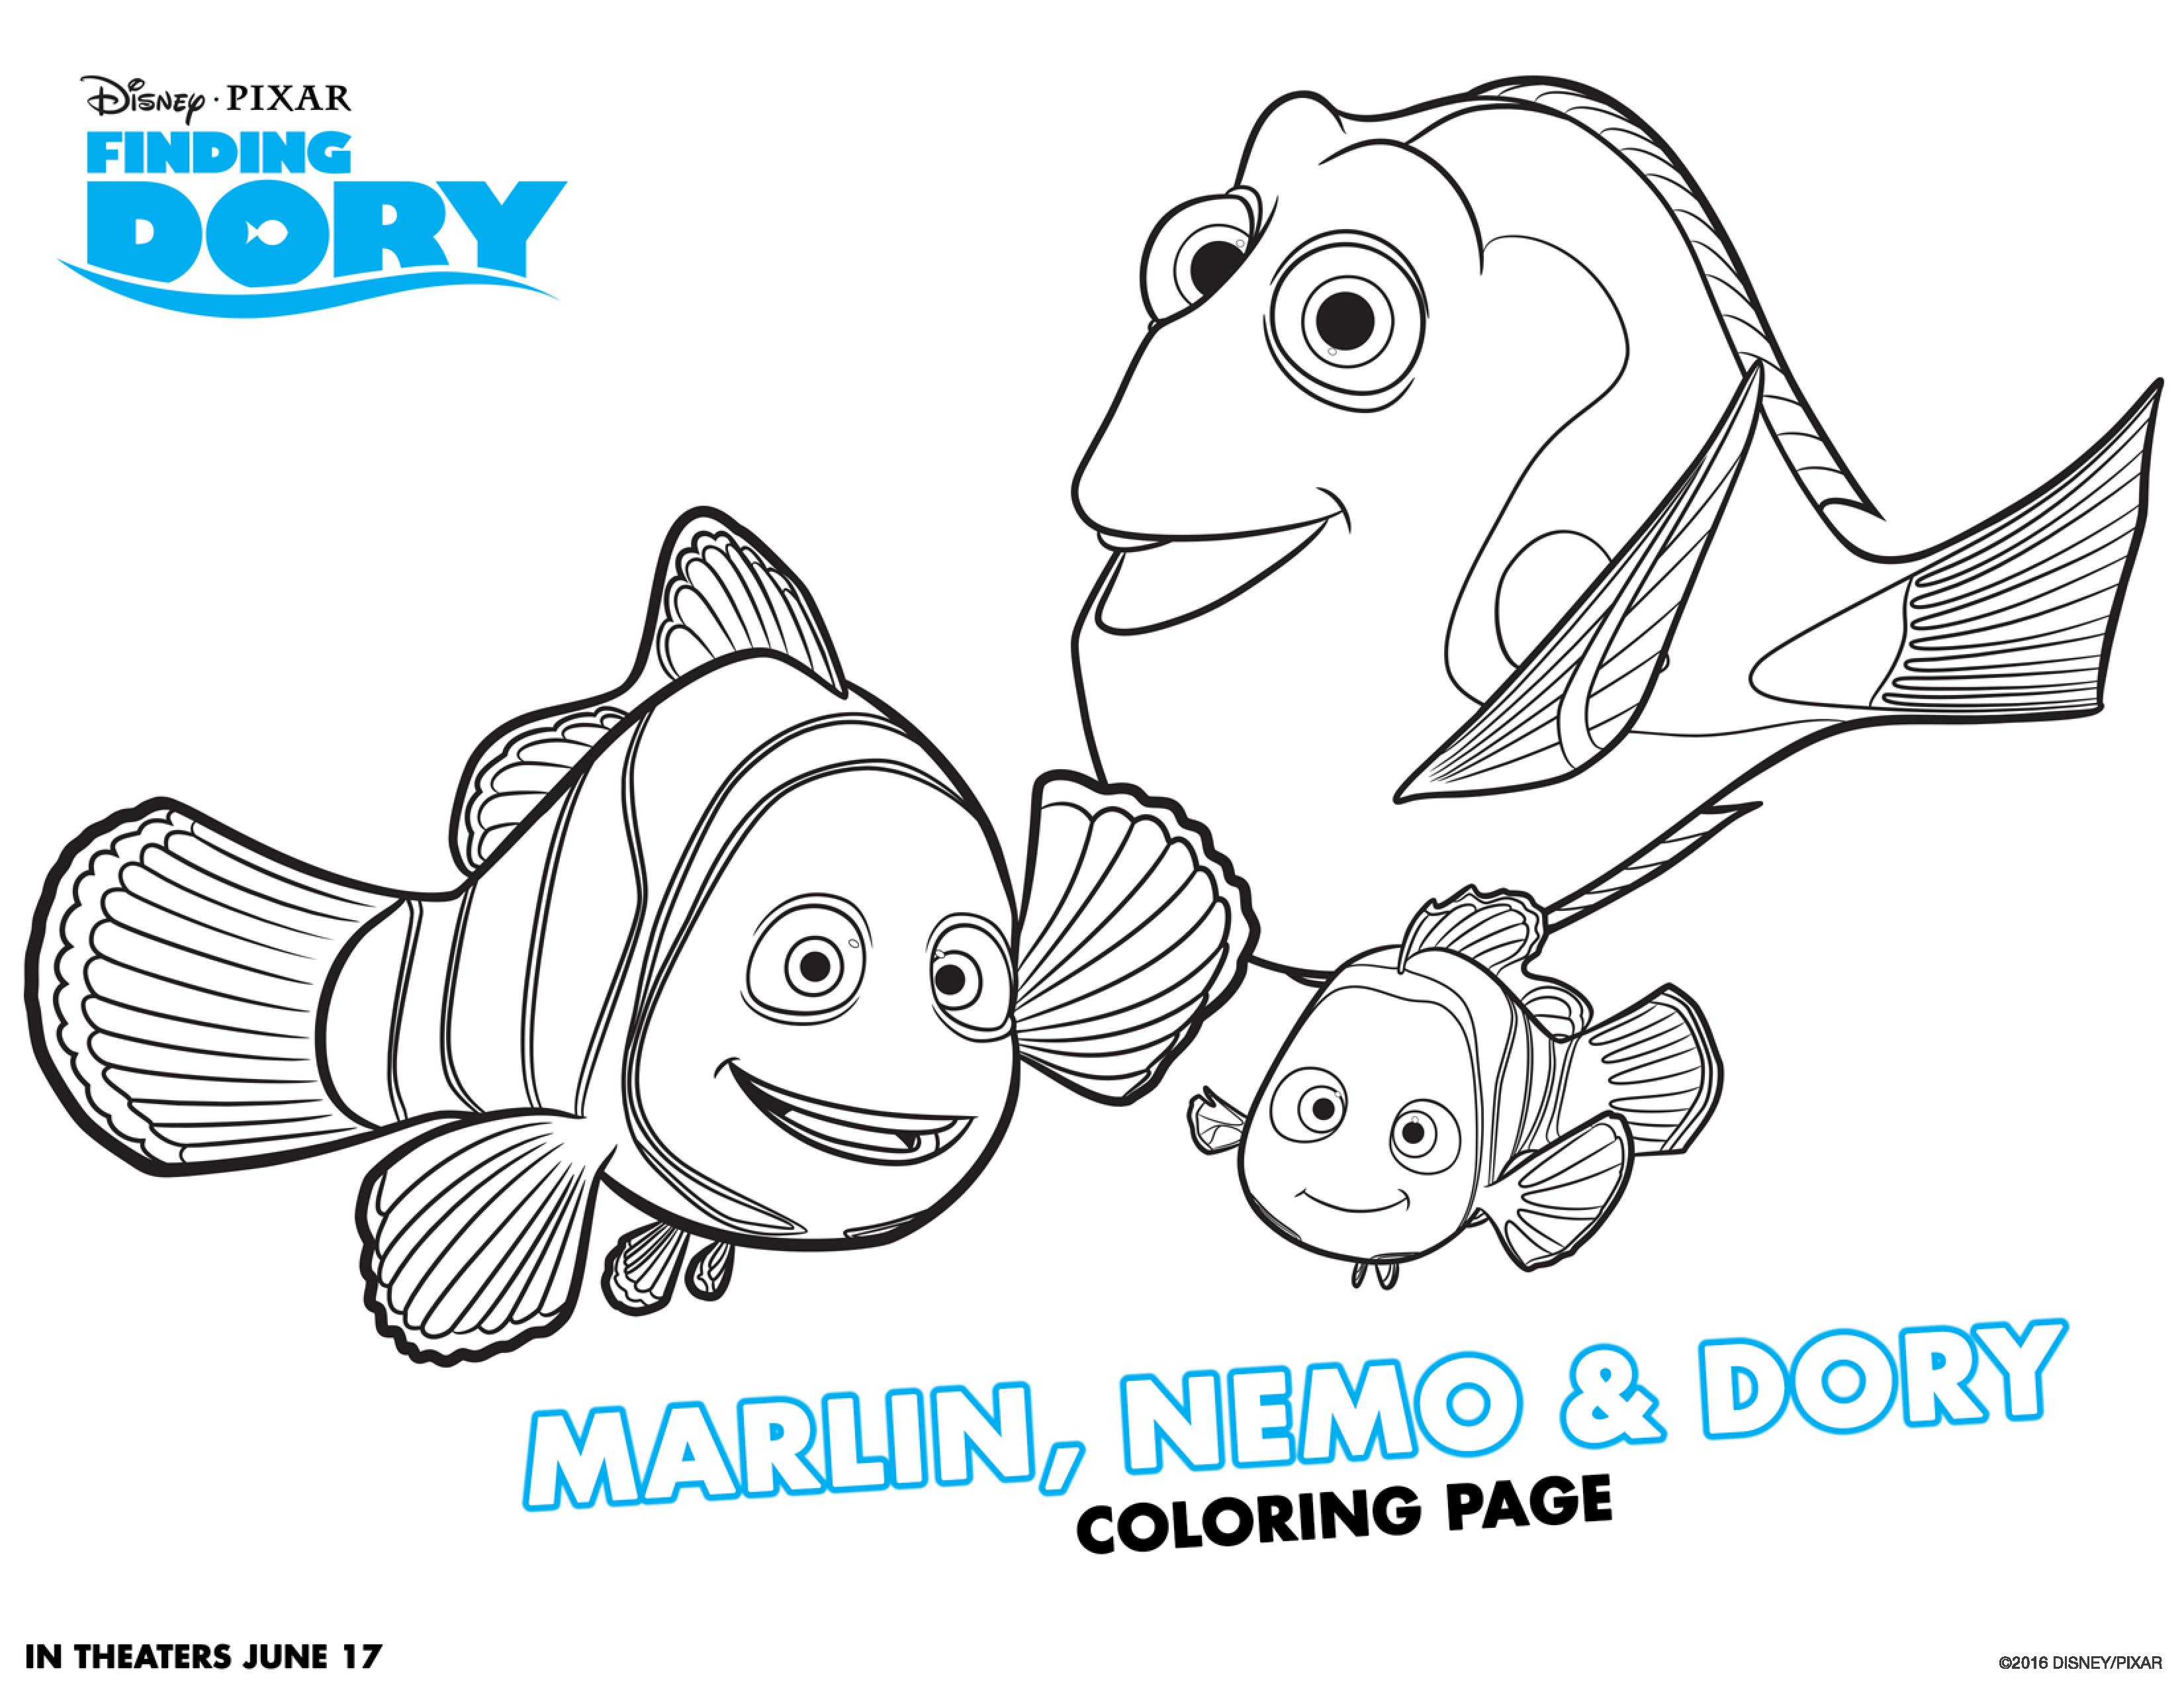 Marlin Neemo and Dory